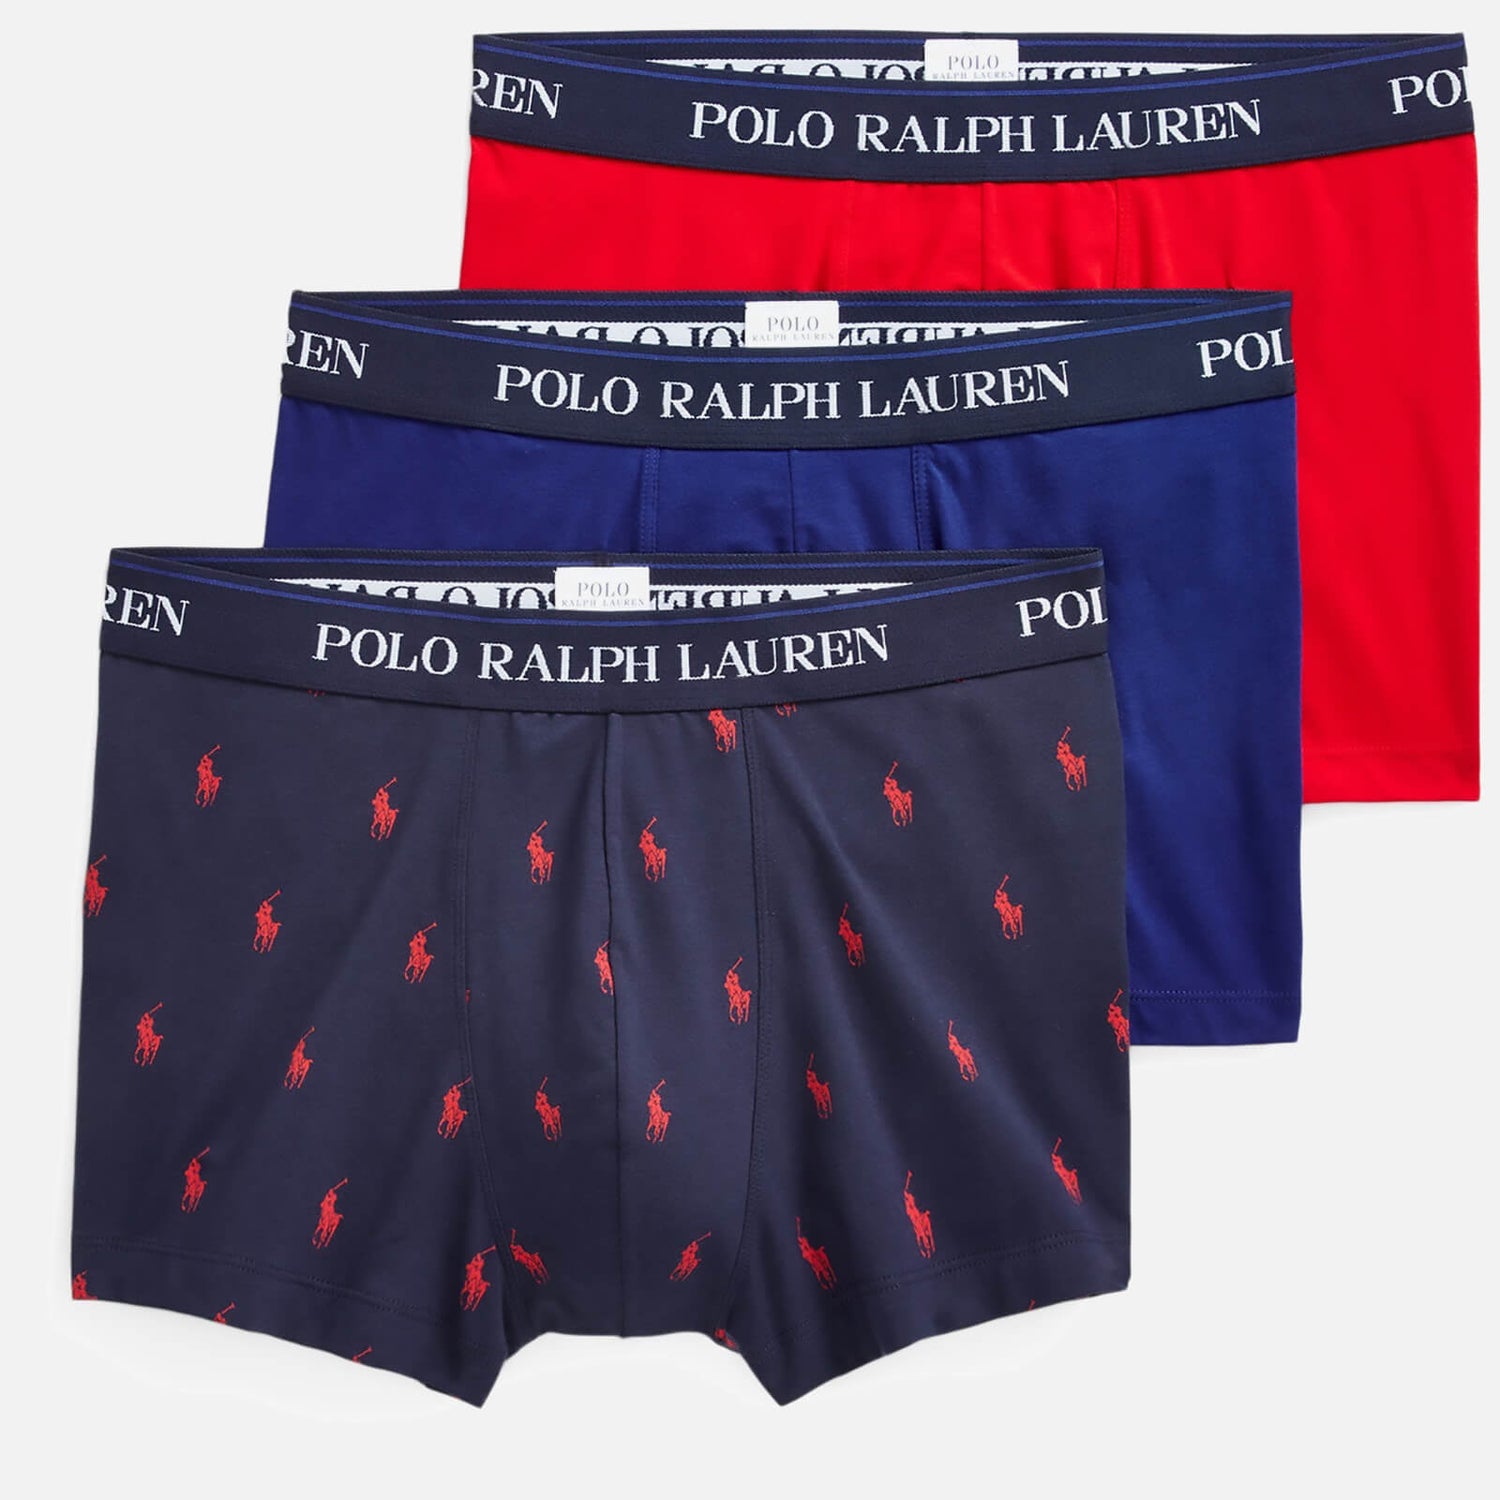 Polo Ralph Lauren Men's 3-Pack Classic Trunks - Newport Navy AOPP/Heather Royal/Red